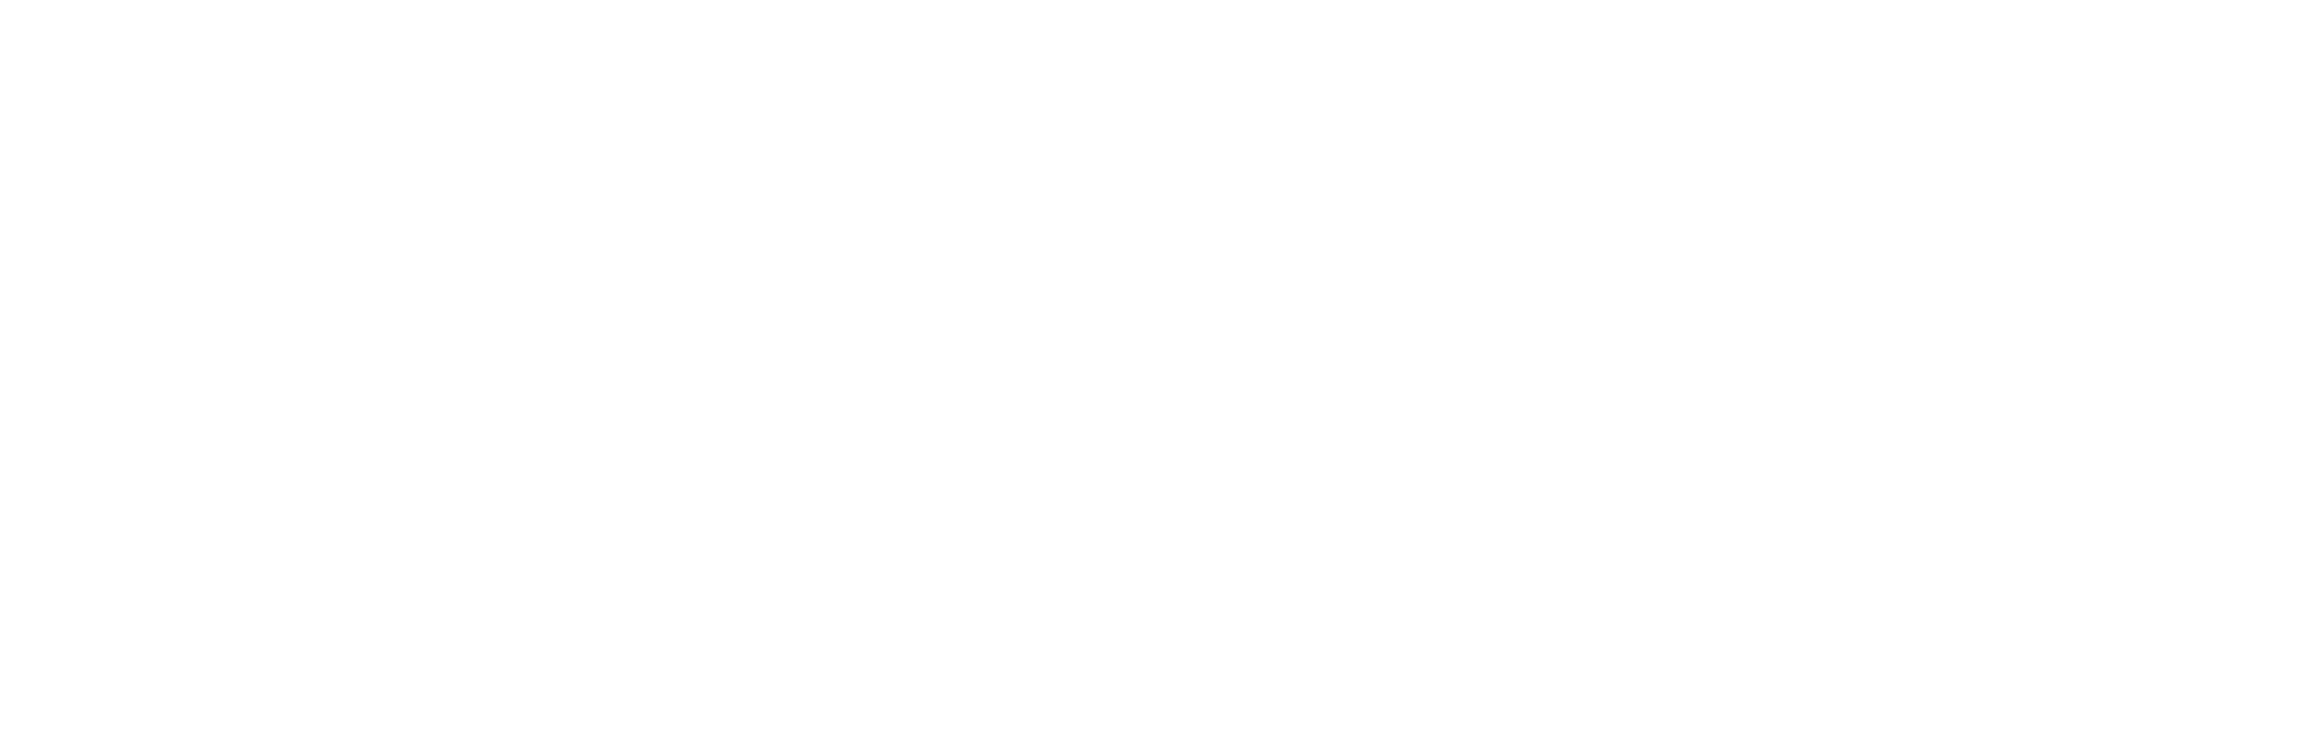 Shipocity-White-Logo